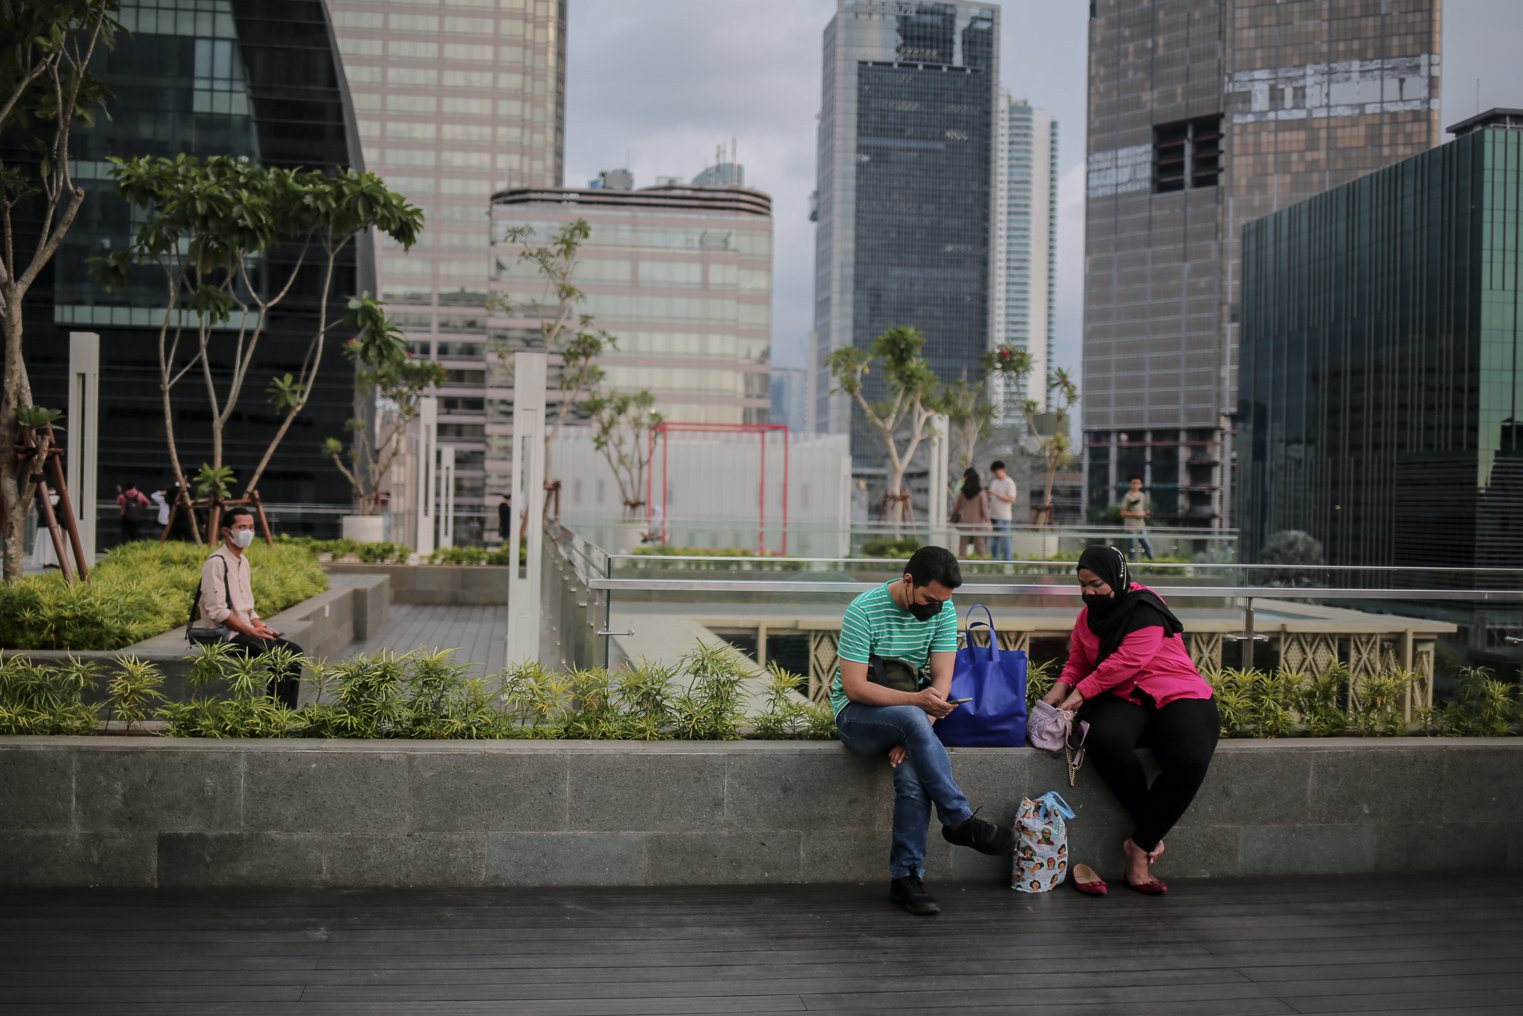 Pengunjung menanti waktu berbuka puasa di Sky Deck Sarinah, Jakarta, Senin (18/4/2022). Kawasan tersebut menjadi salah satu destinasi baru bagi warga Jakarta dan sekitarnya untuk menanti waktu berbuka puasa atau ngabuburit bersama keluarga dan kerabat.